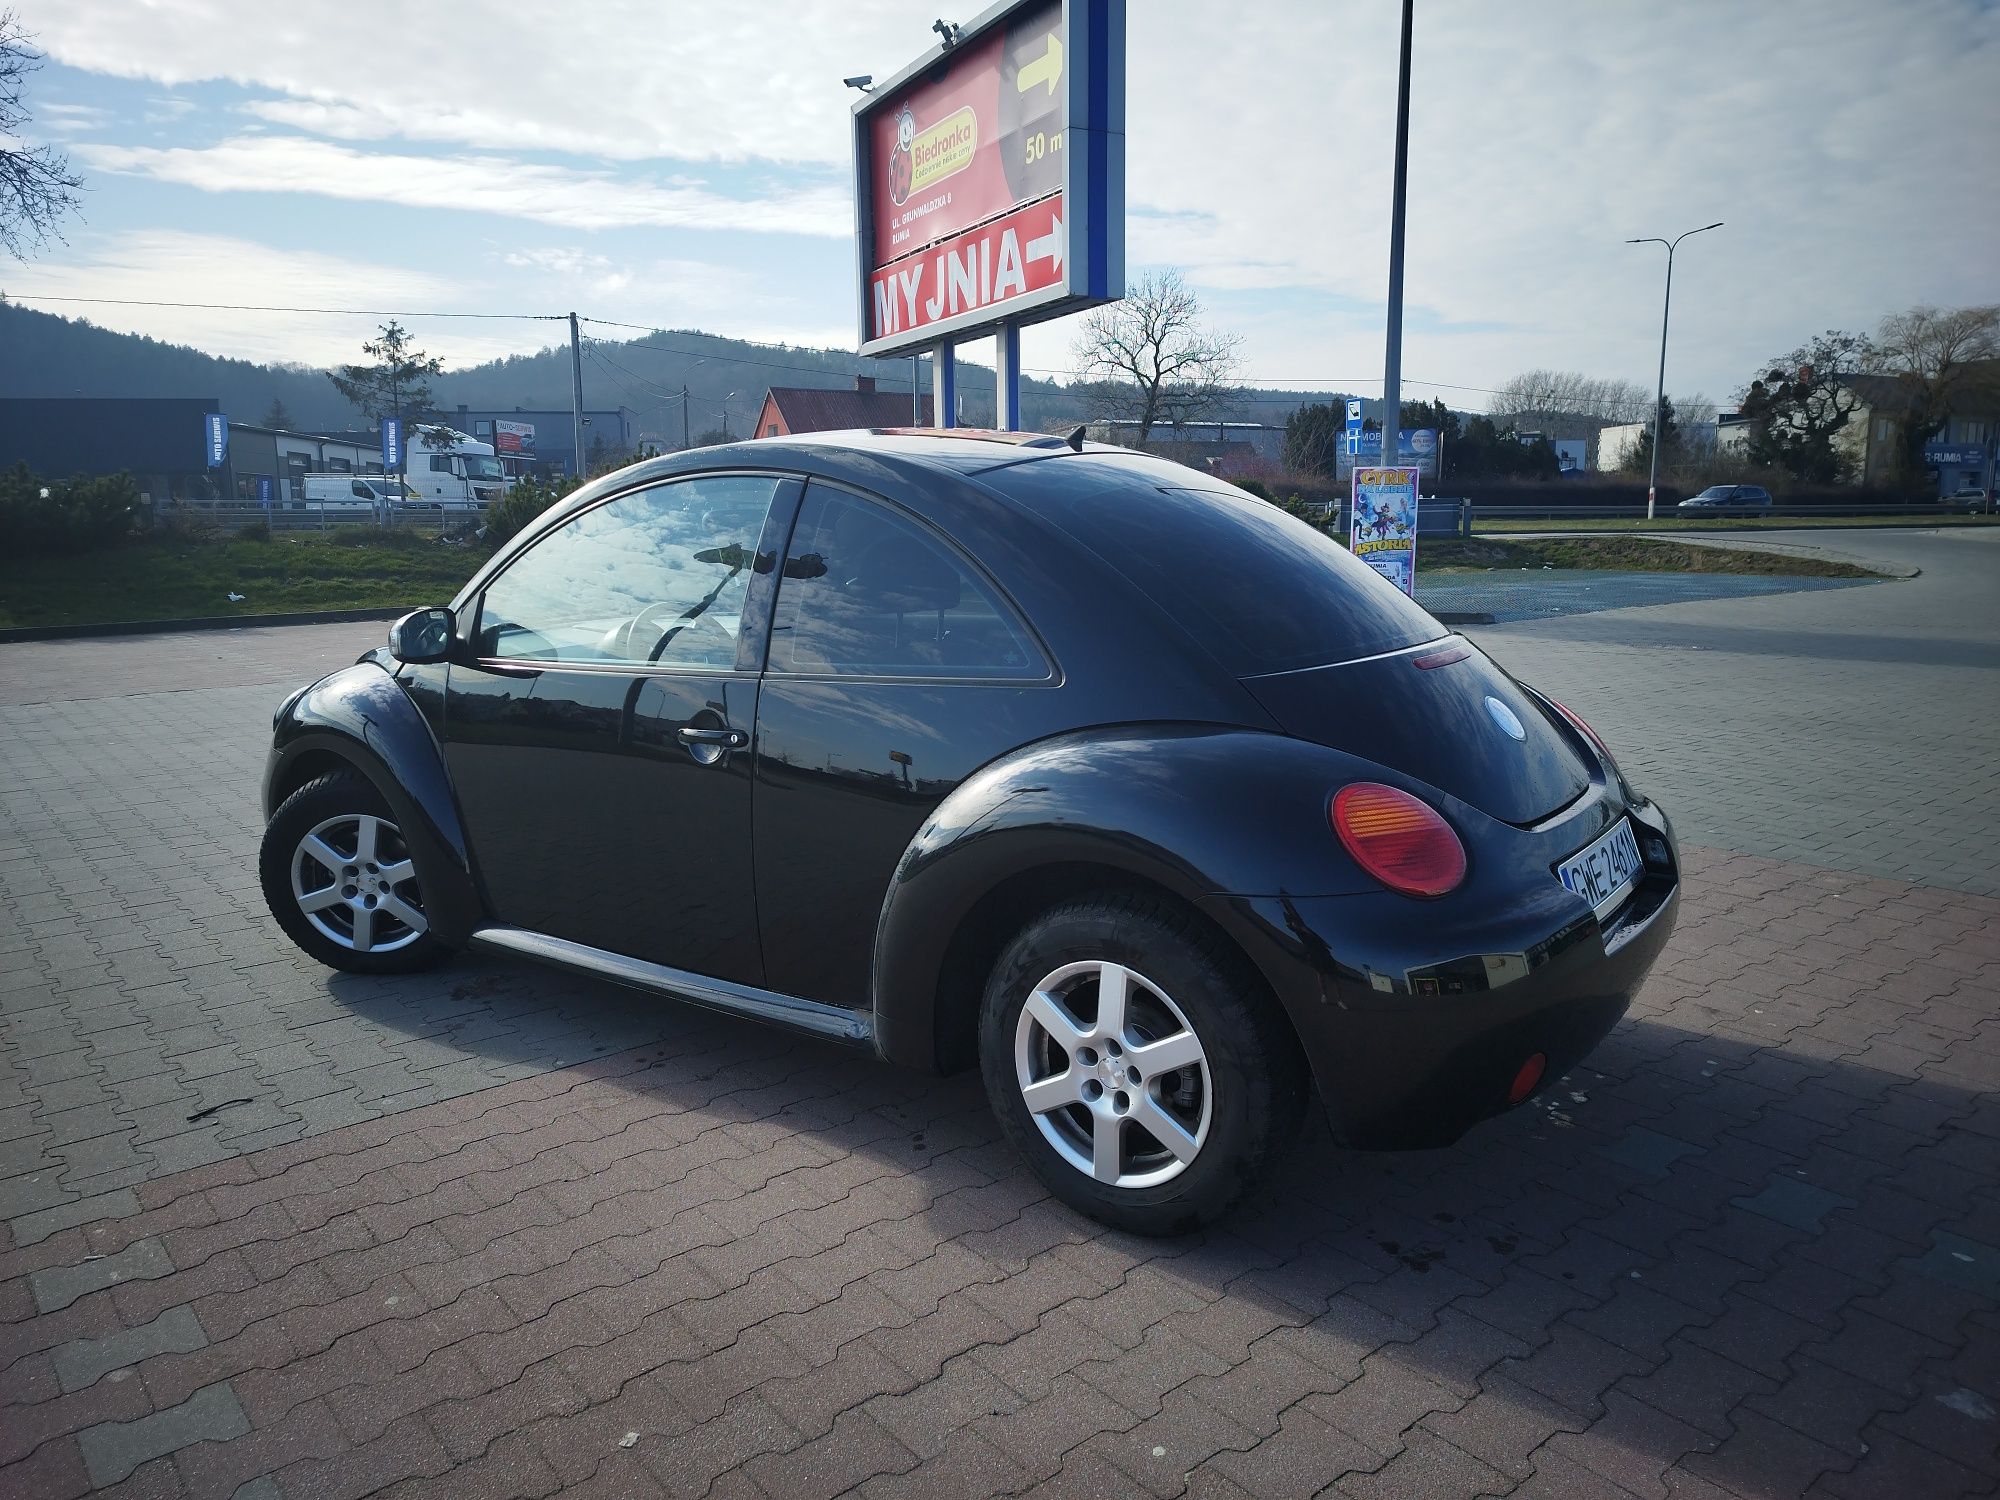 VW New Beetle 1.6 benzyna 2003